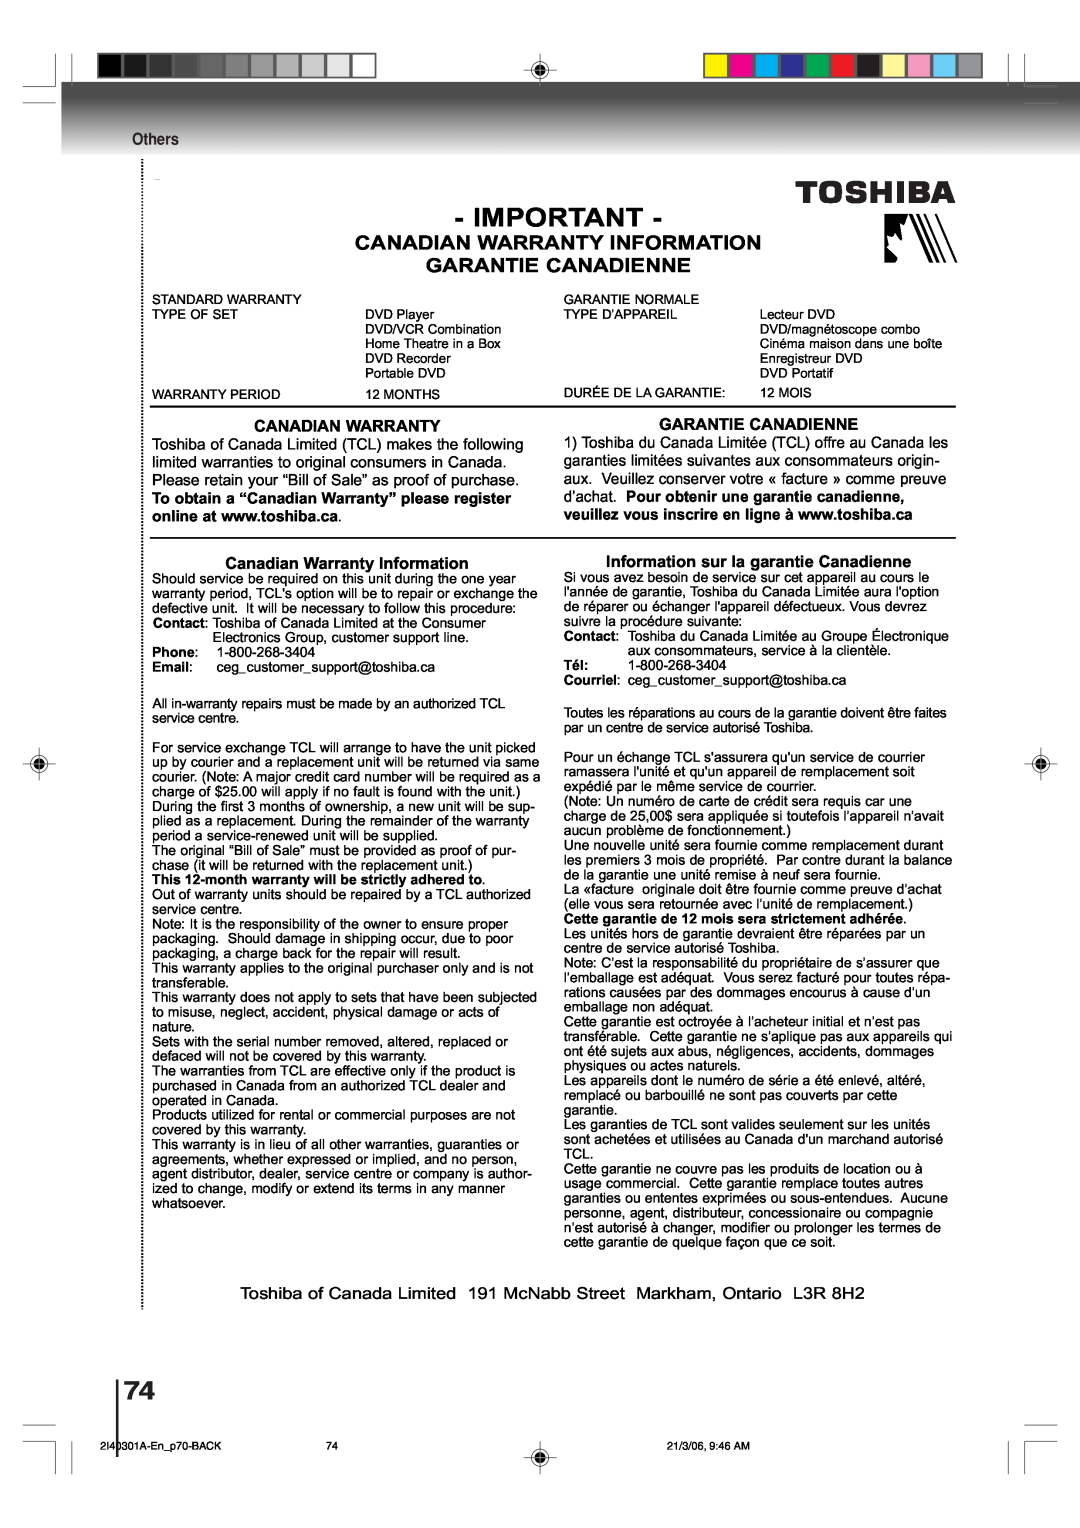 Toshiba SD-V594SC owner manual Canadian Warranty Information Garantie Canadienne, Information sur la garantie Canadienne 